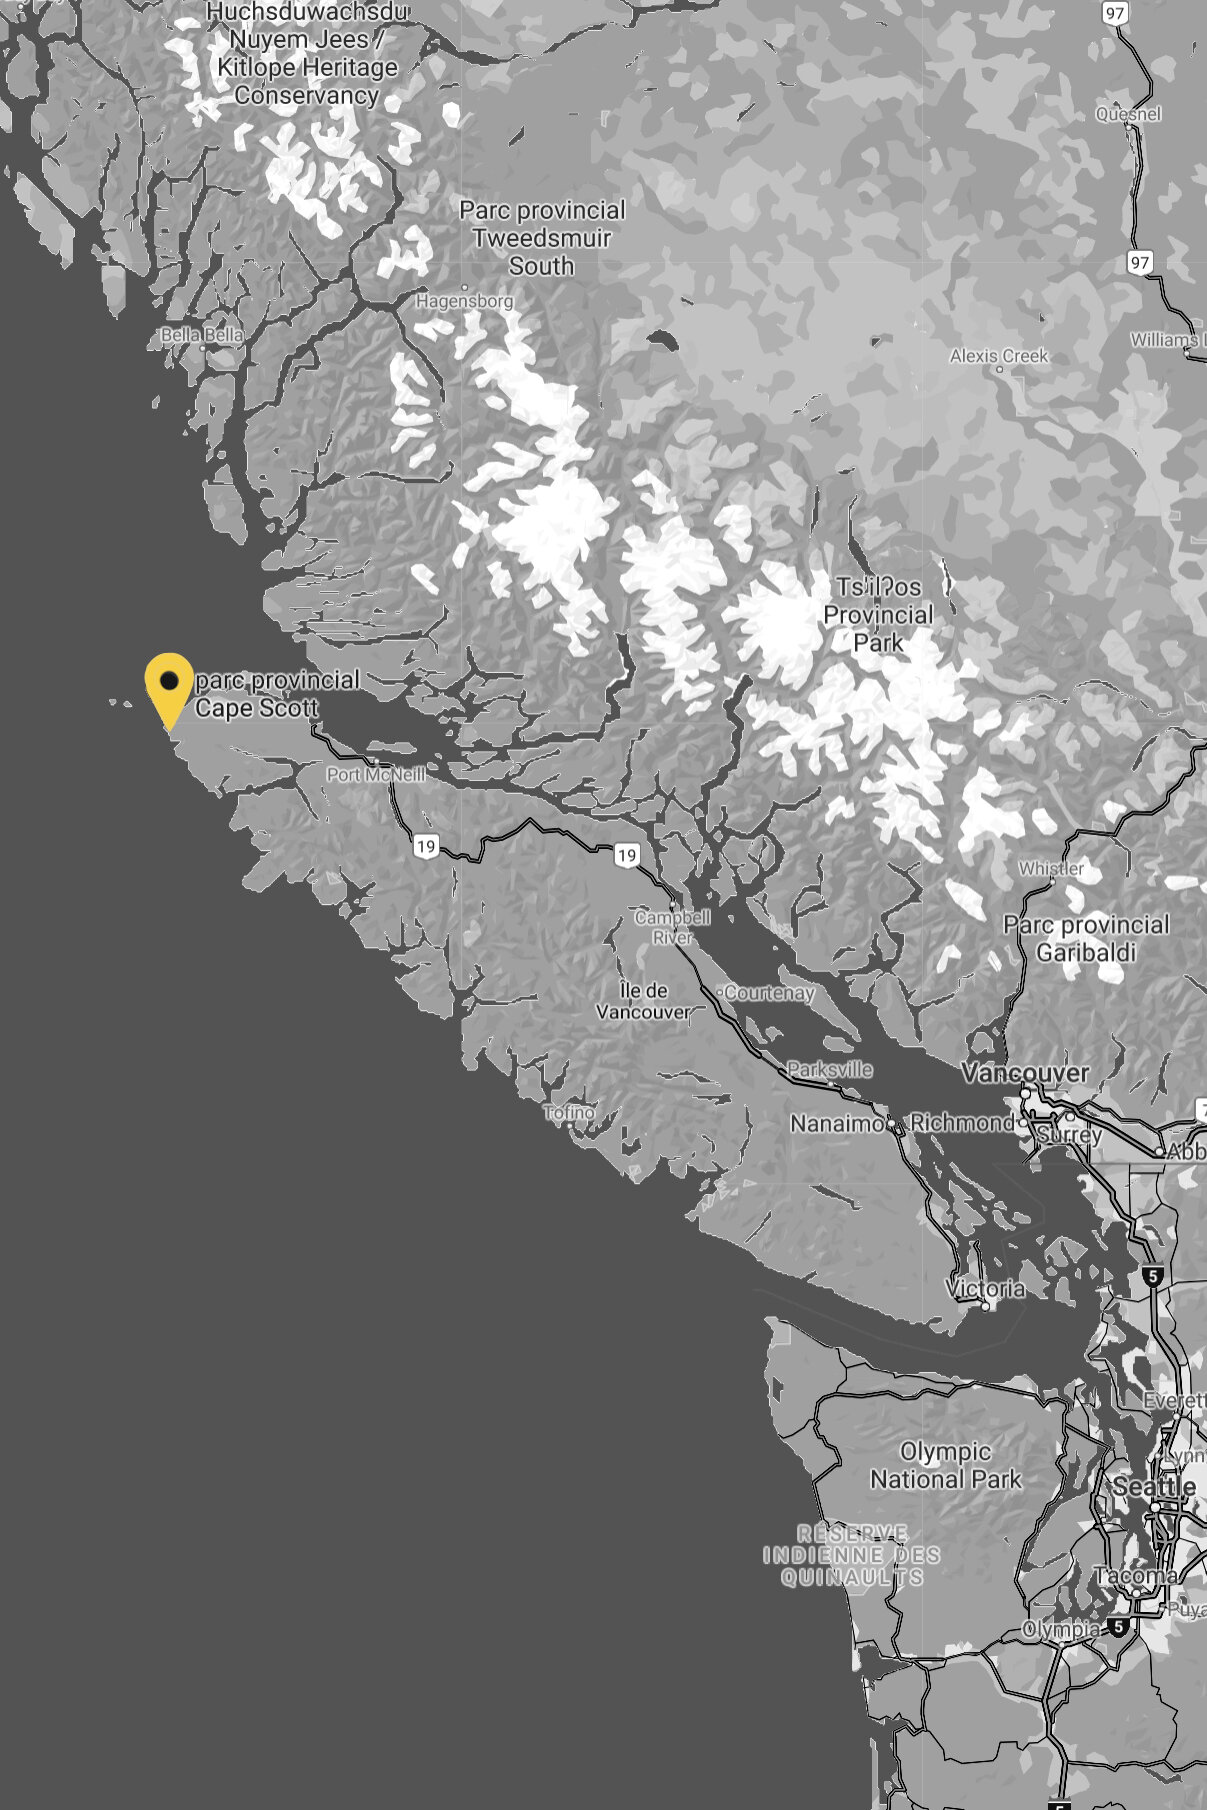 Parc provincial cape scott - carte google.jpg